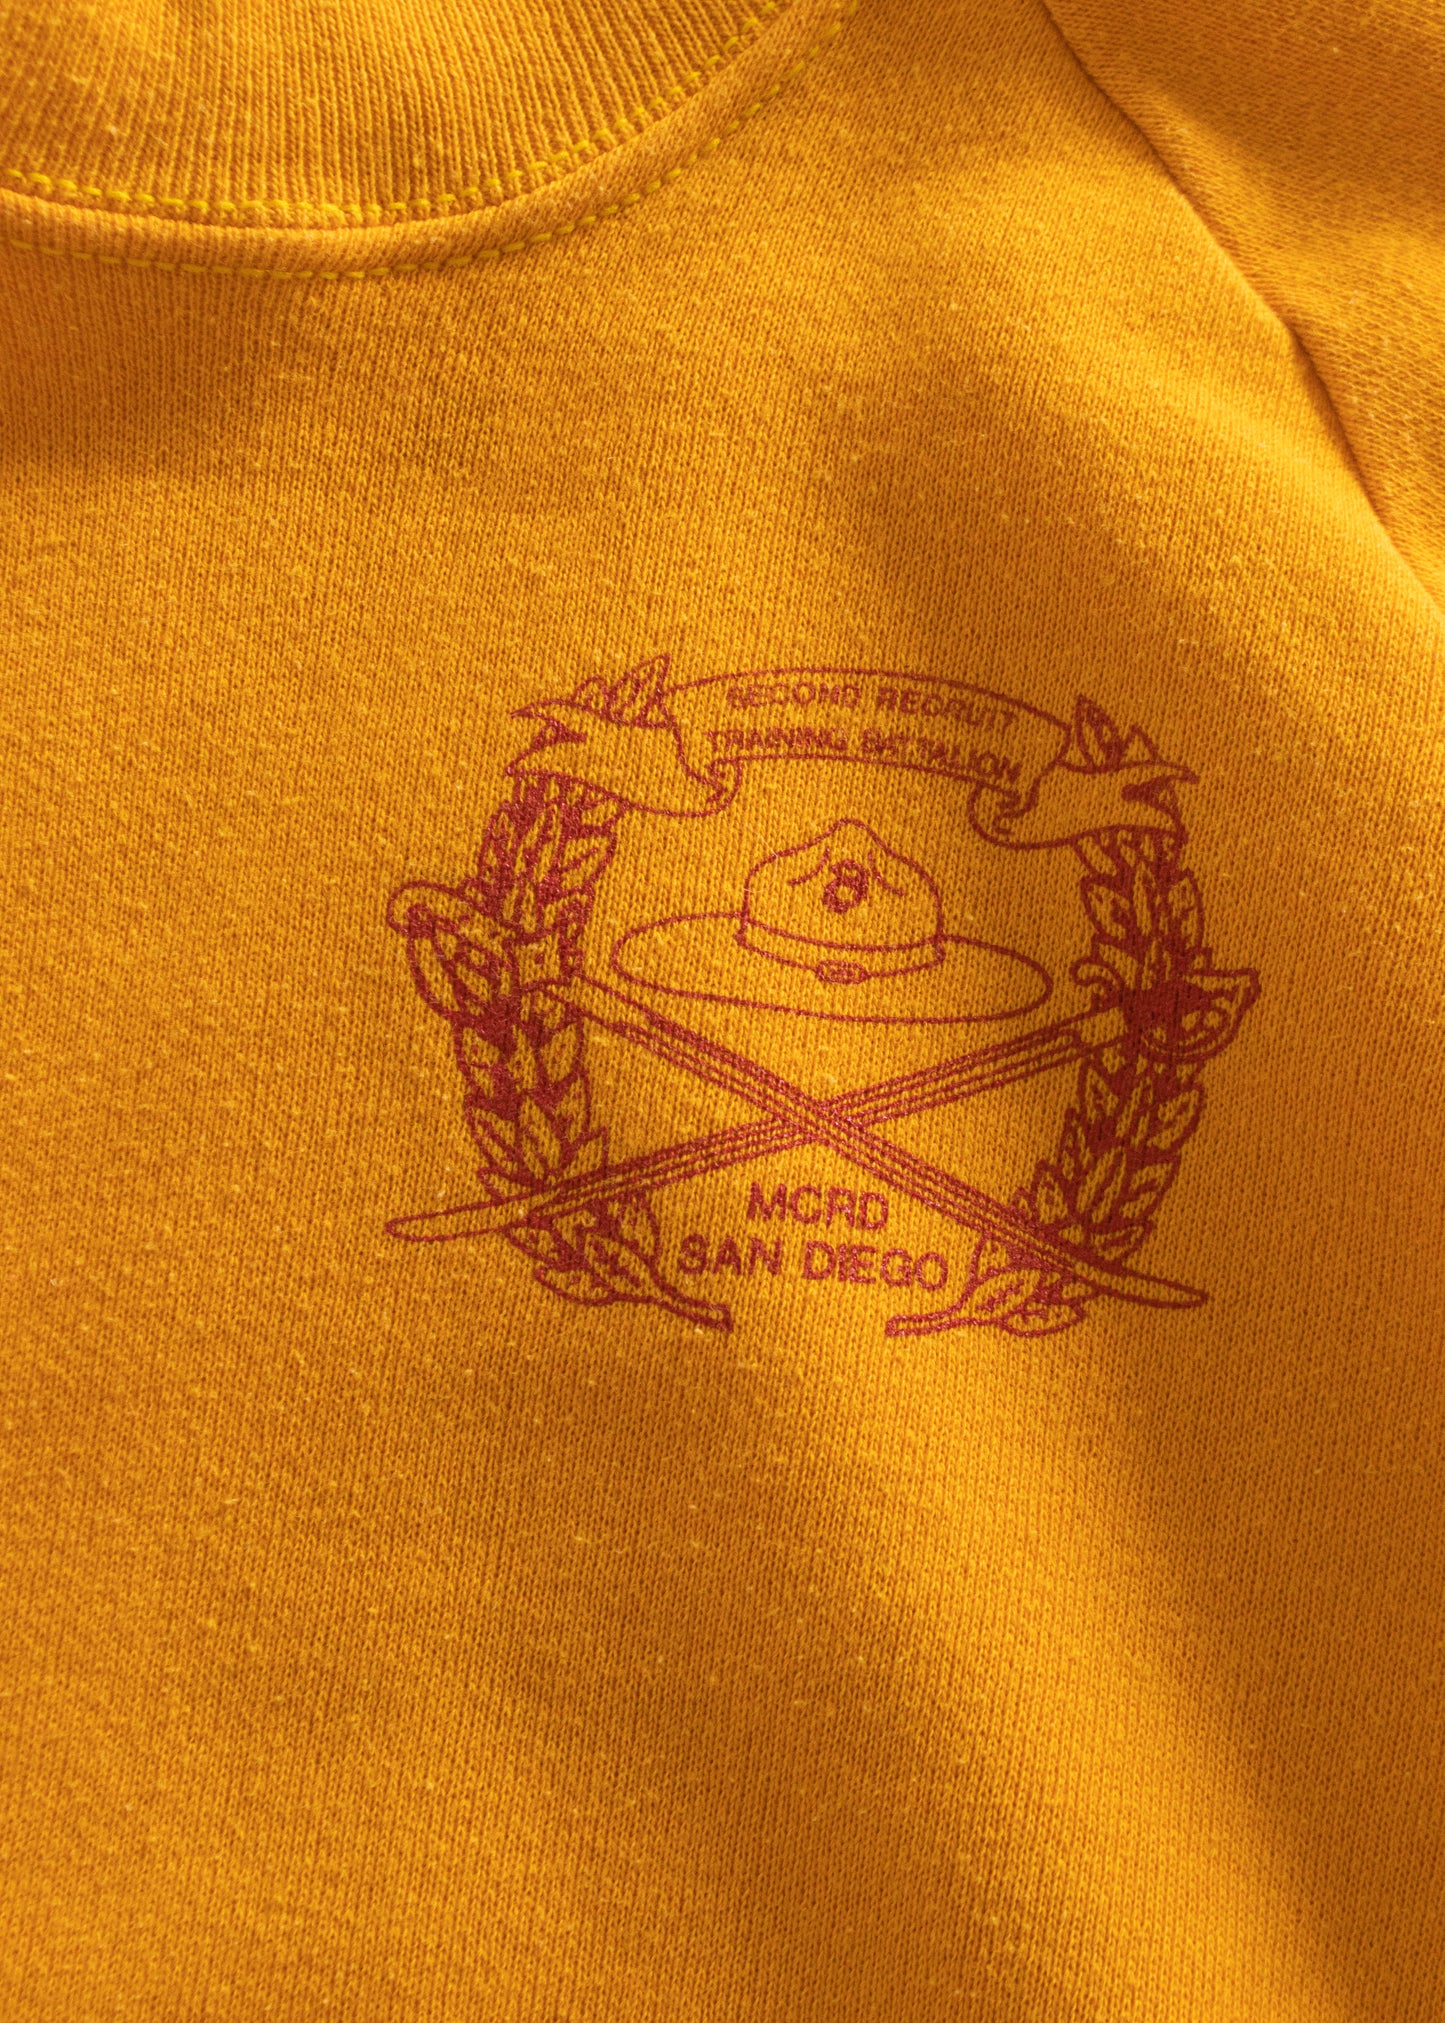 1980s Platinum Sportswear San Diego Souvenir Sweatshirt Size 2XS/XS